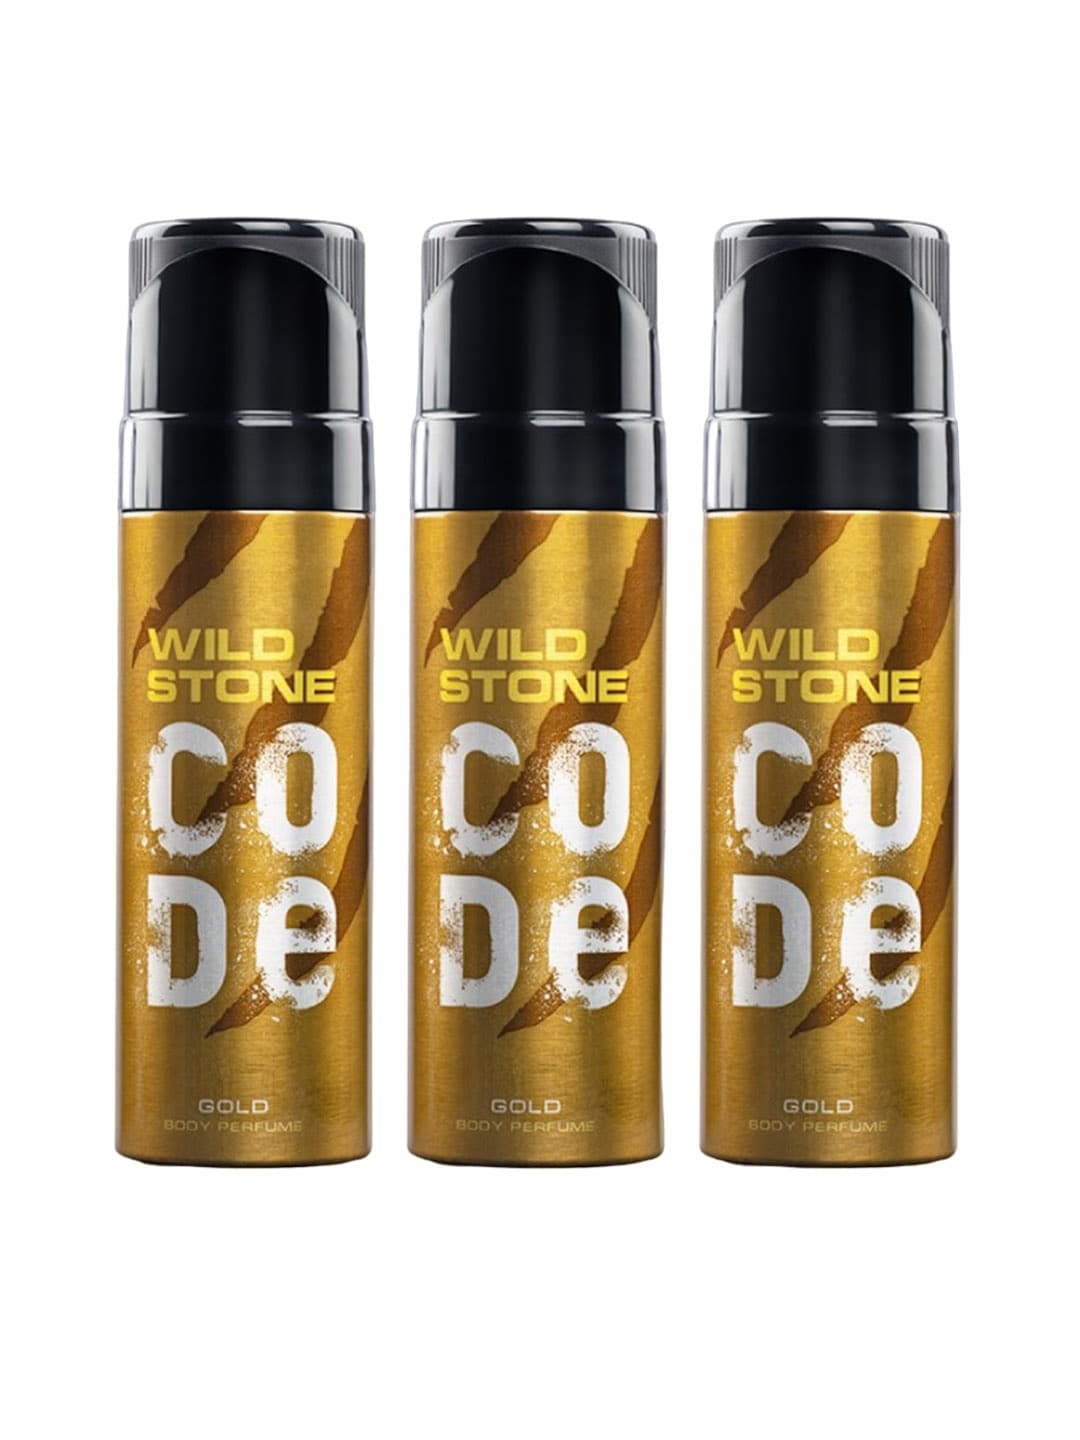 Wild stone Men Set of 3 Code Gold Long Lasting Body Deodorant Perfume - 150 ml each